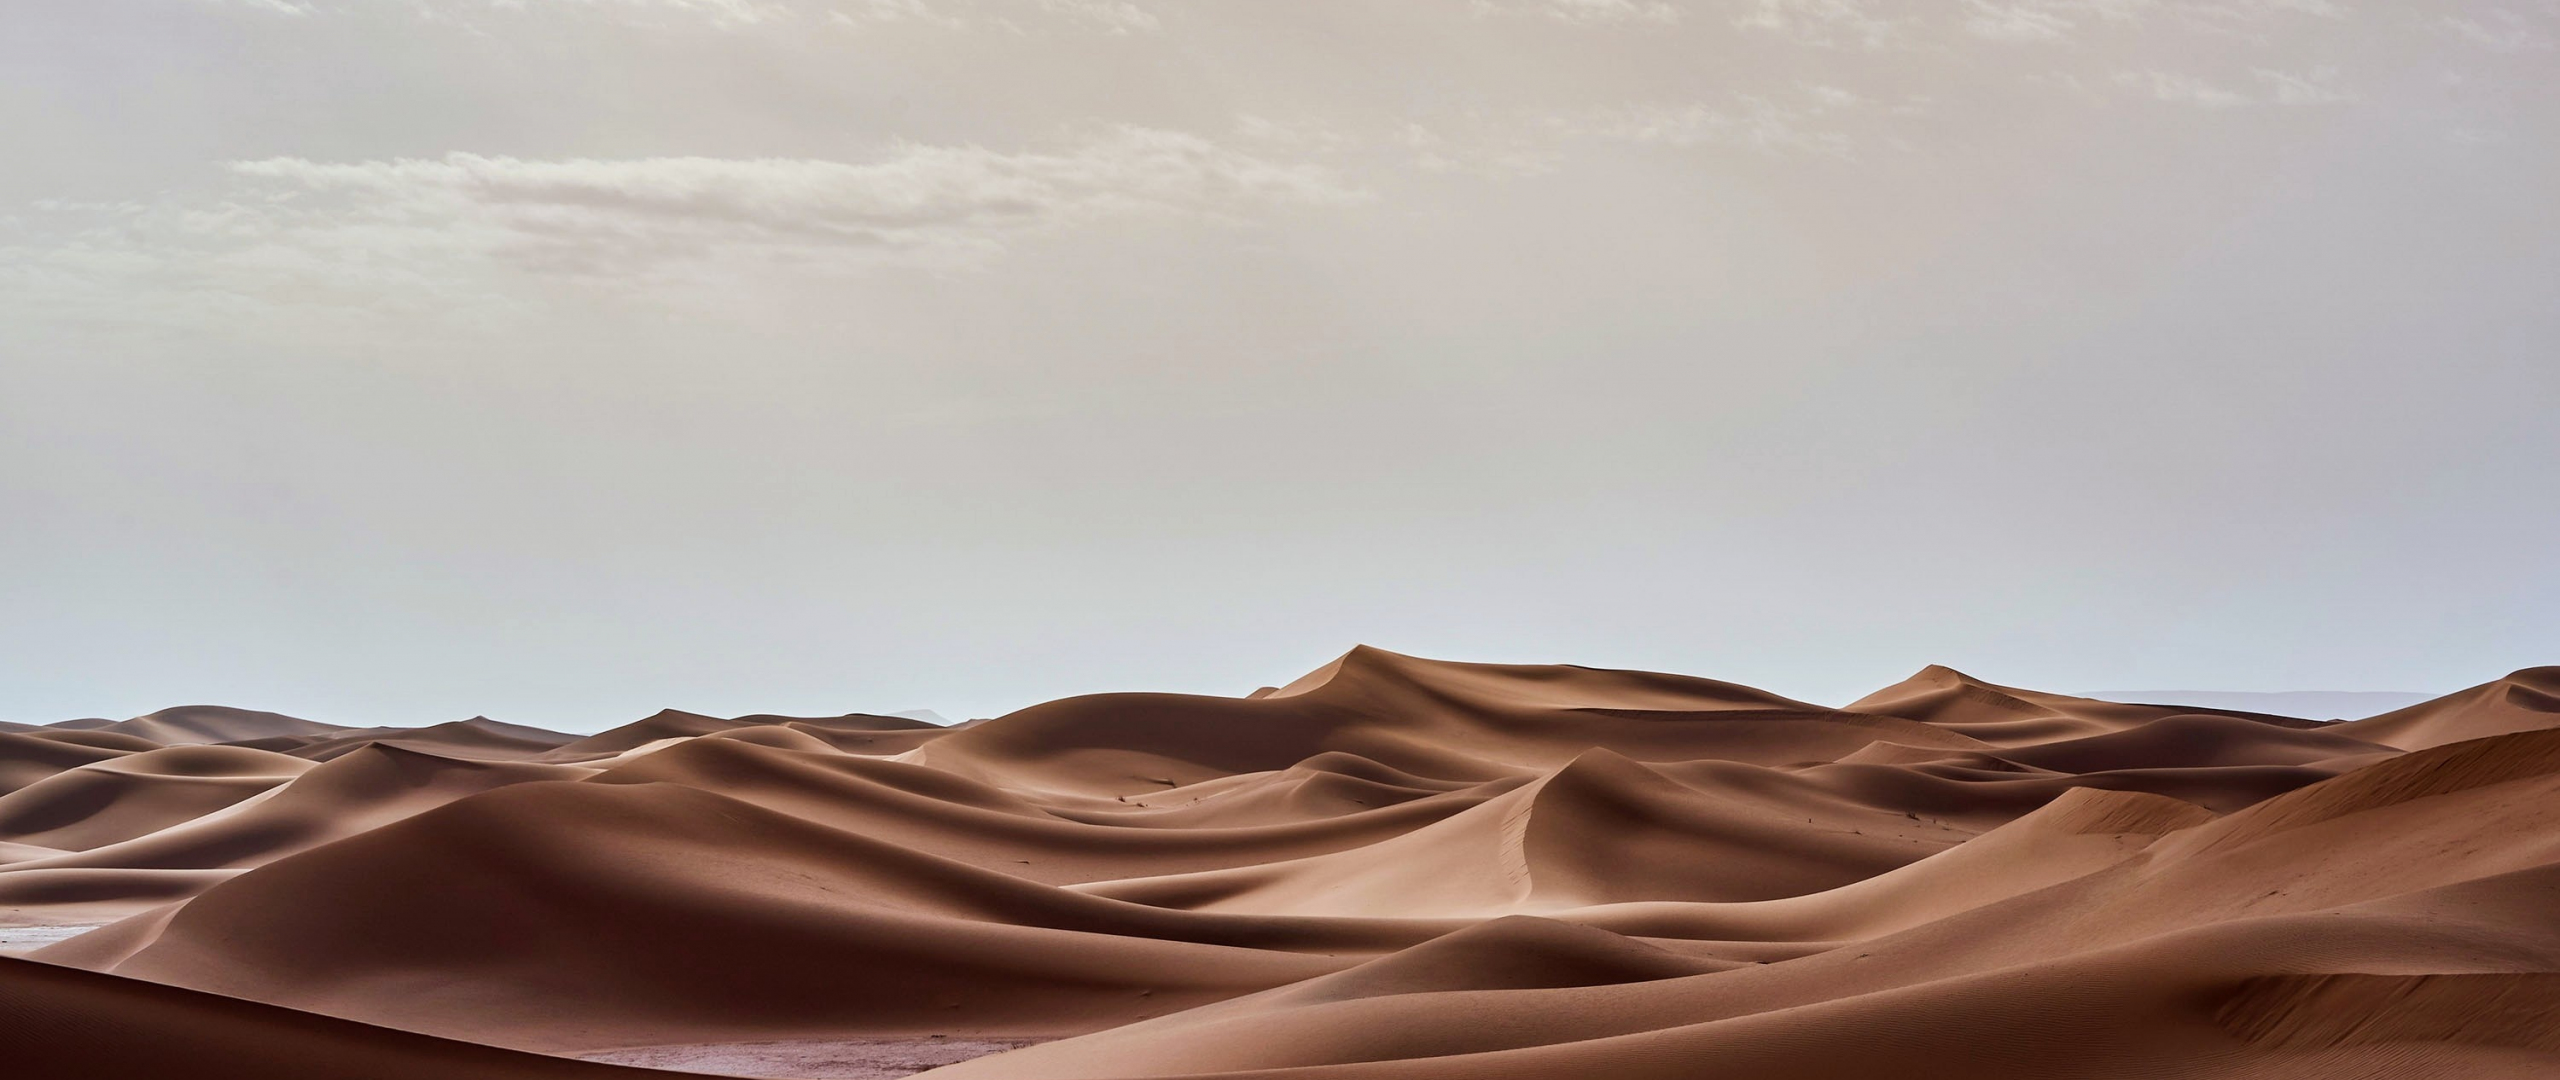 Landscape, desert dunes, nature, 2560x1080 wallpaper